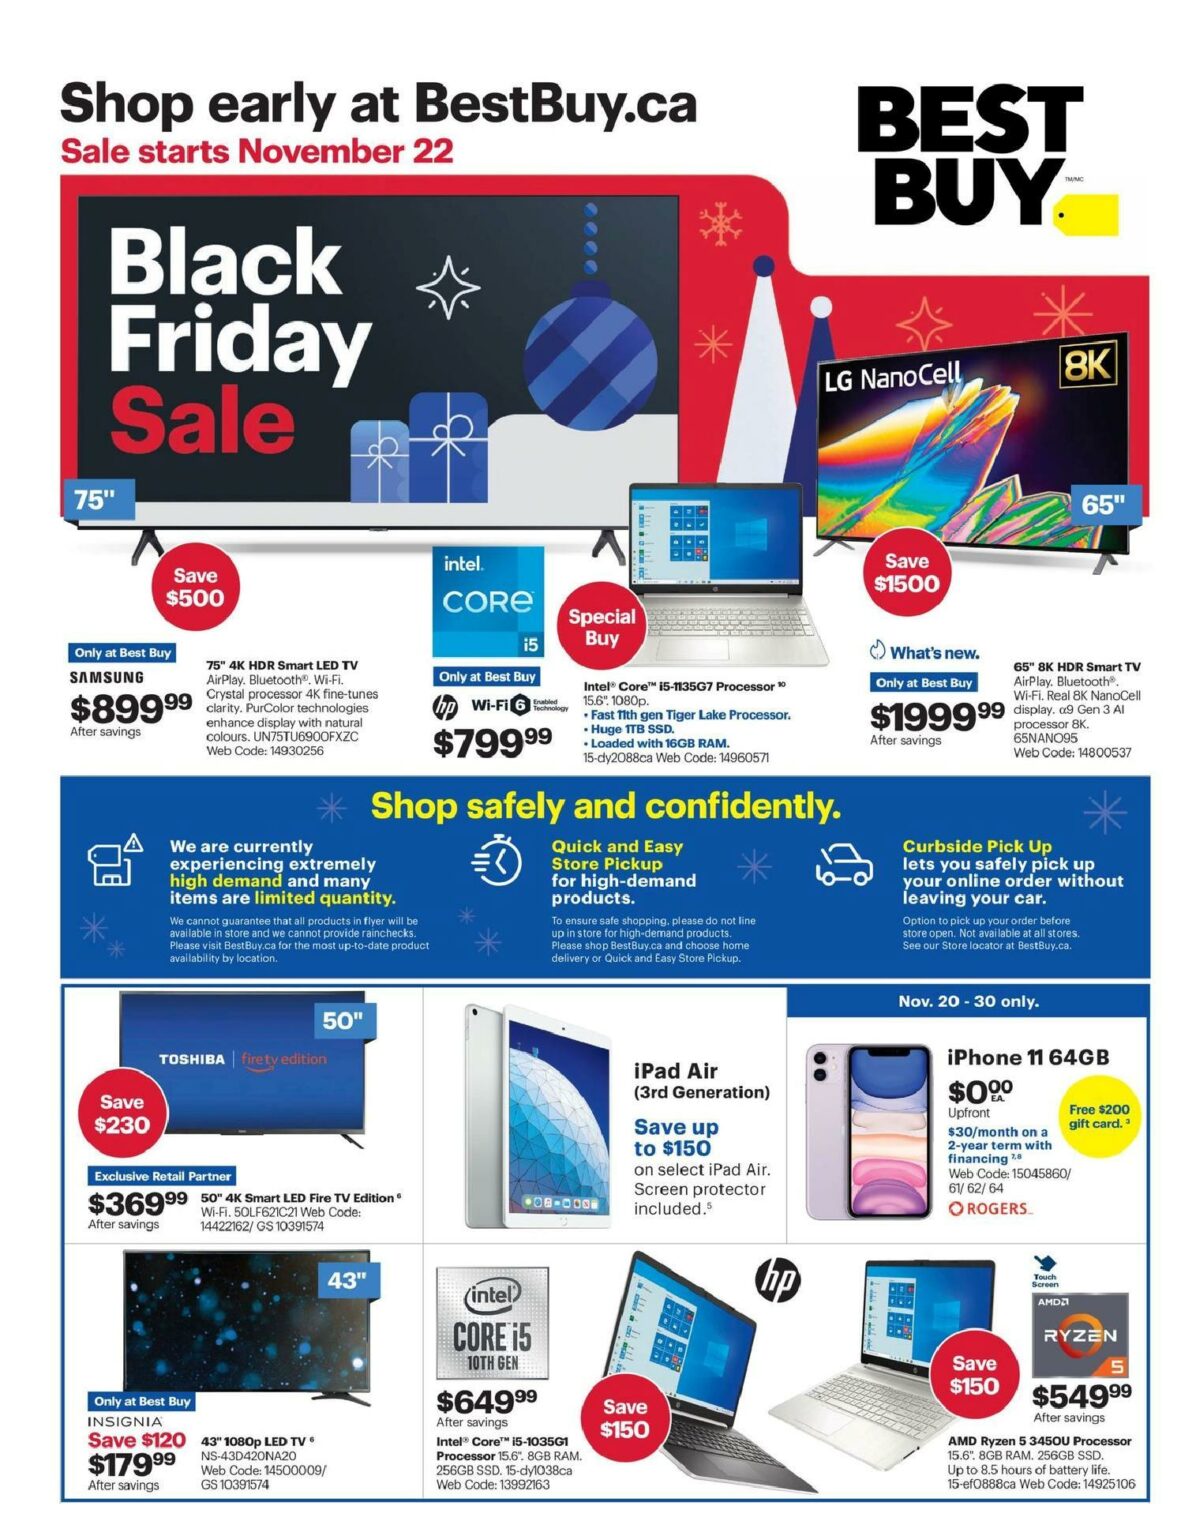 Best Buy Black Friday Flyer Deals 2020 Canada - When Are Bestbuy Black Friday Deals Over